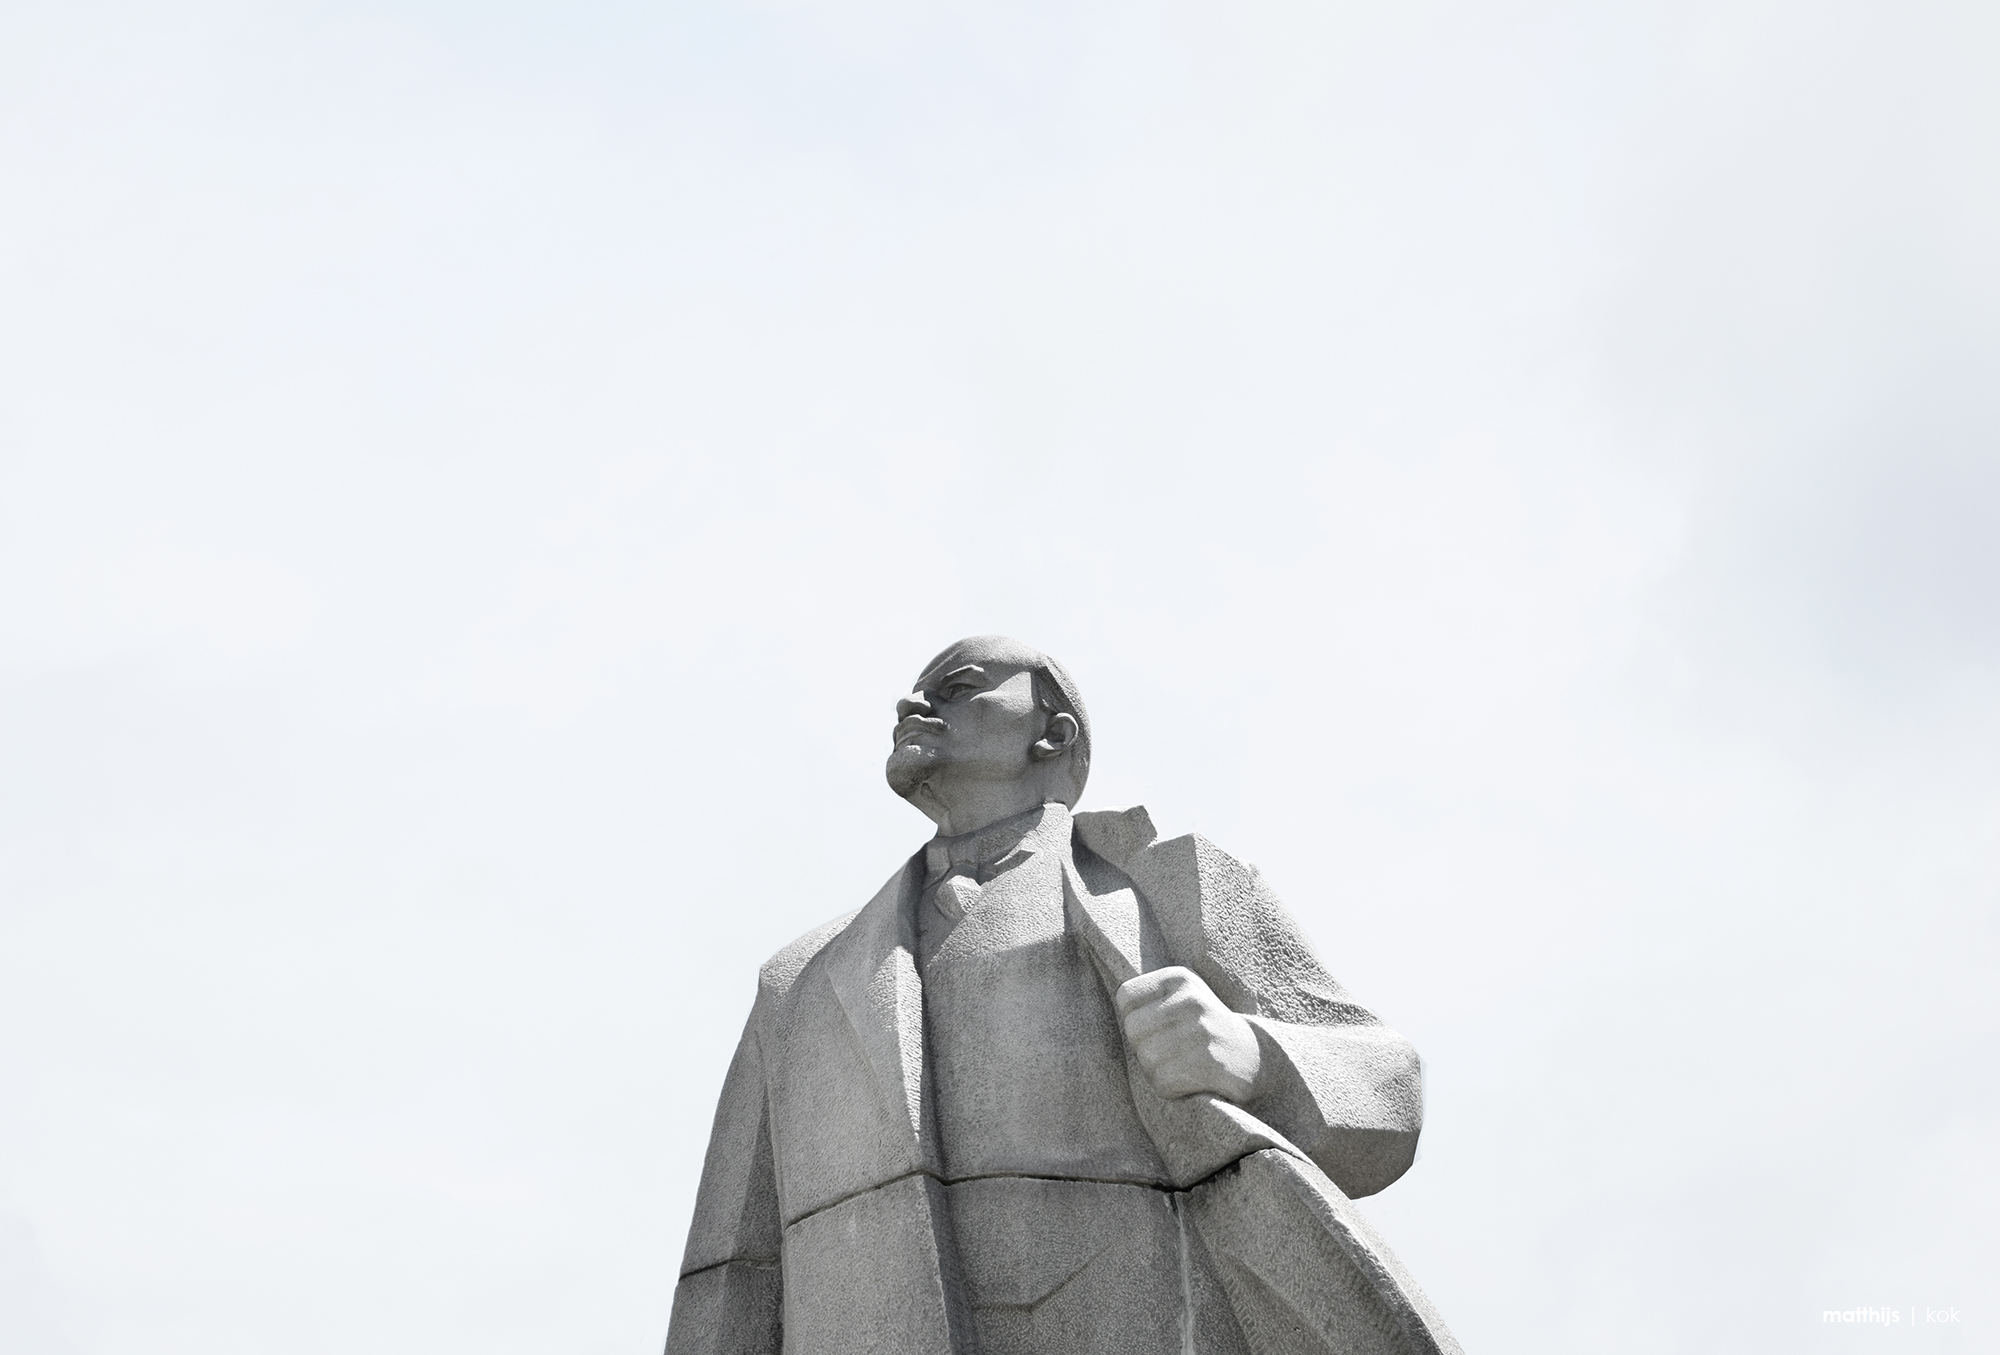 Lenin Statue, Sofia, Bulgaria | Photo by Matthijs Kok